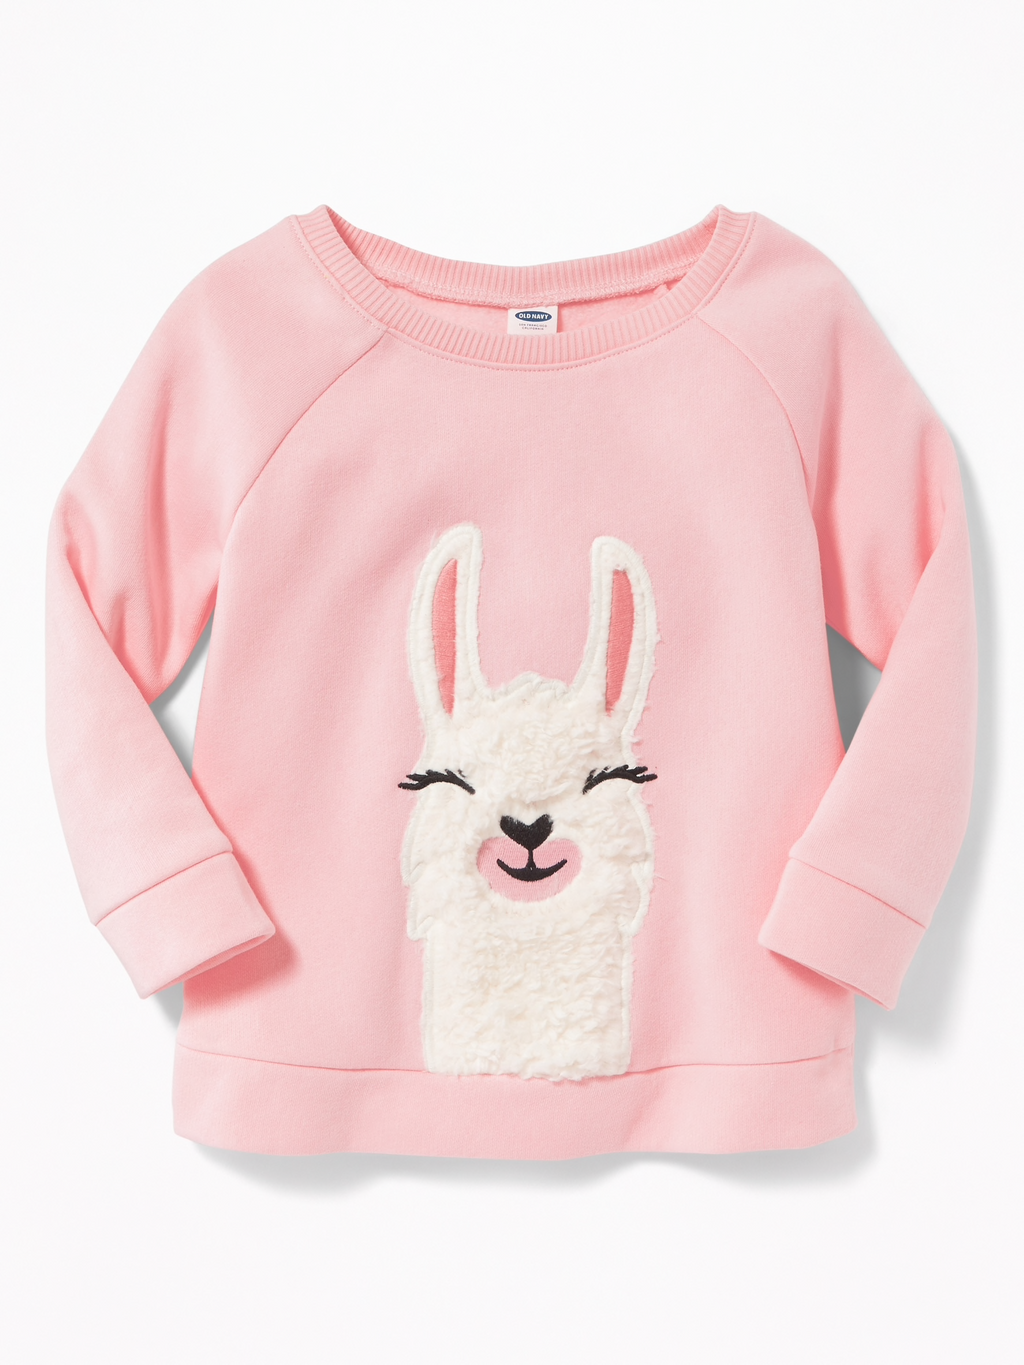 Sweater OLD NAVY Plush Critter-Graphic Tunic Sweatshirt for Toddler Girls